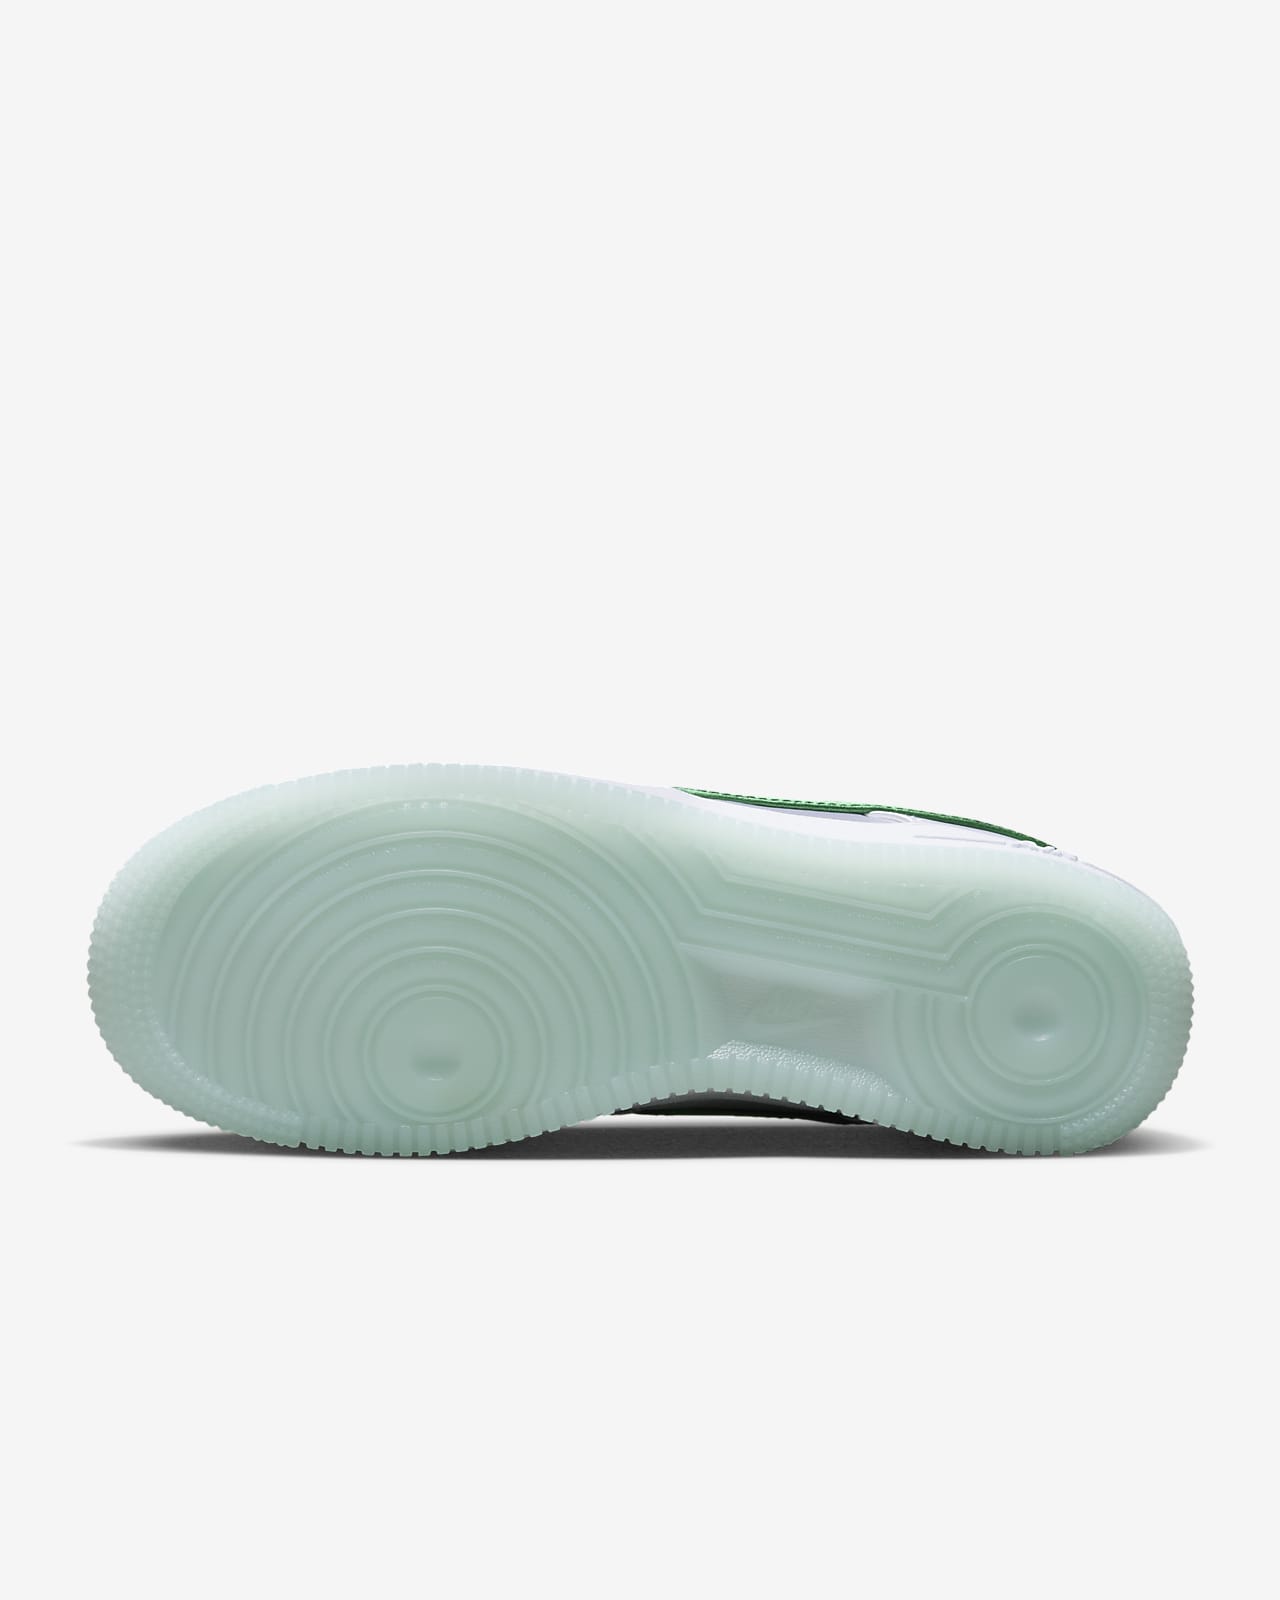 Nike Air Force 1 UV Light Color Change Sneakers | Hypebae